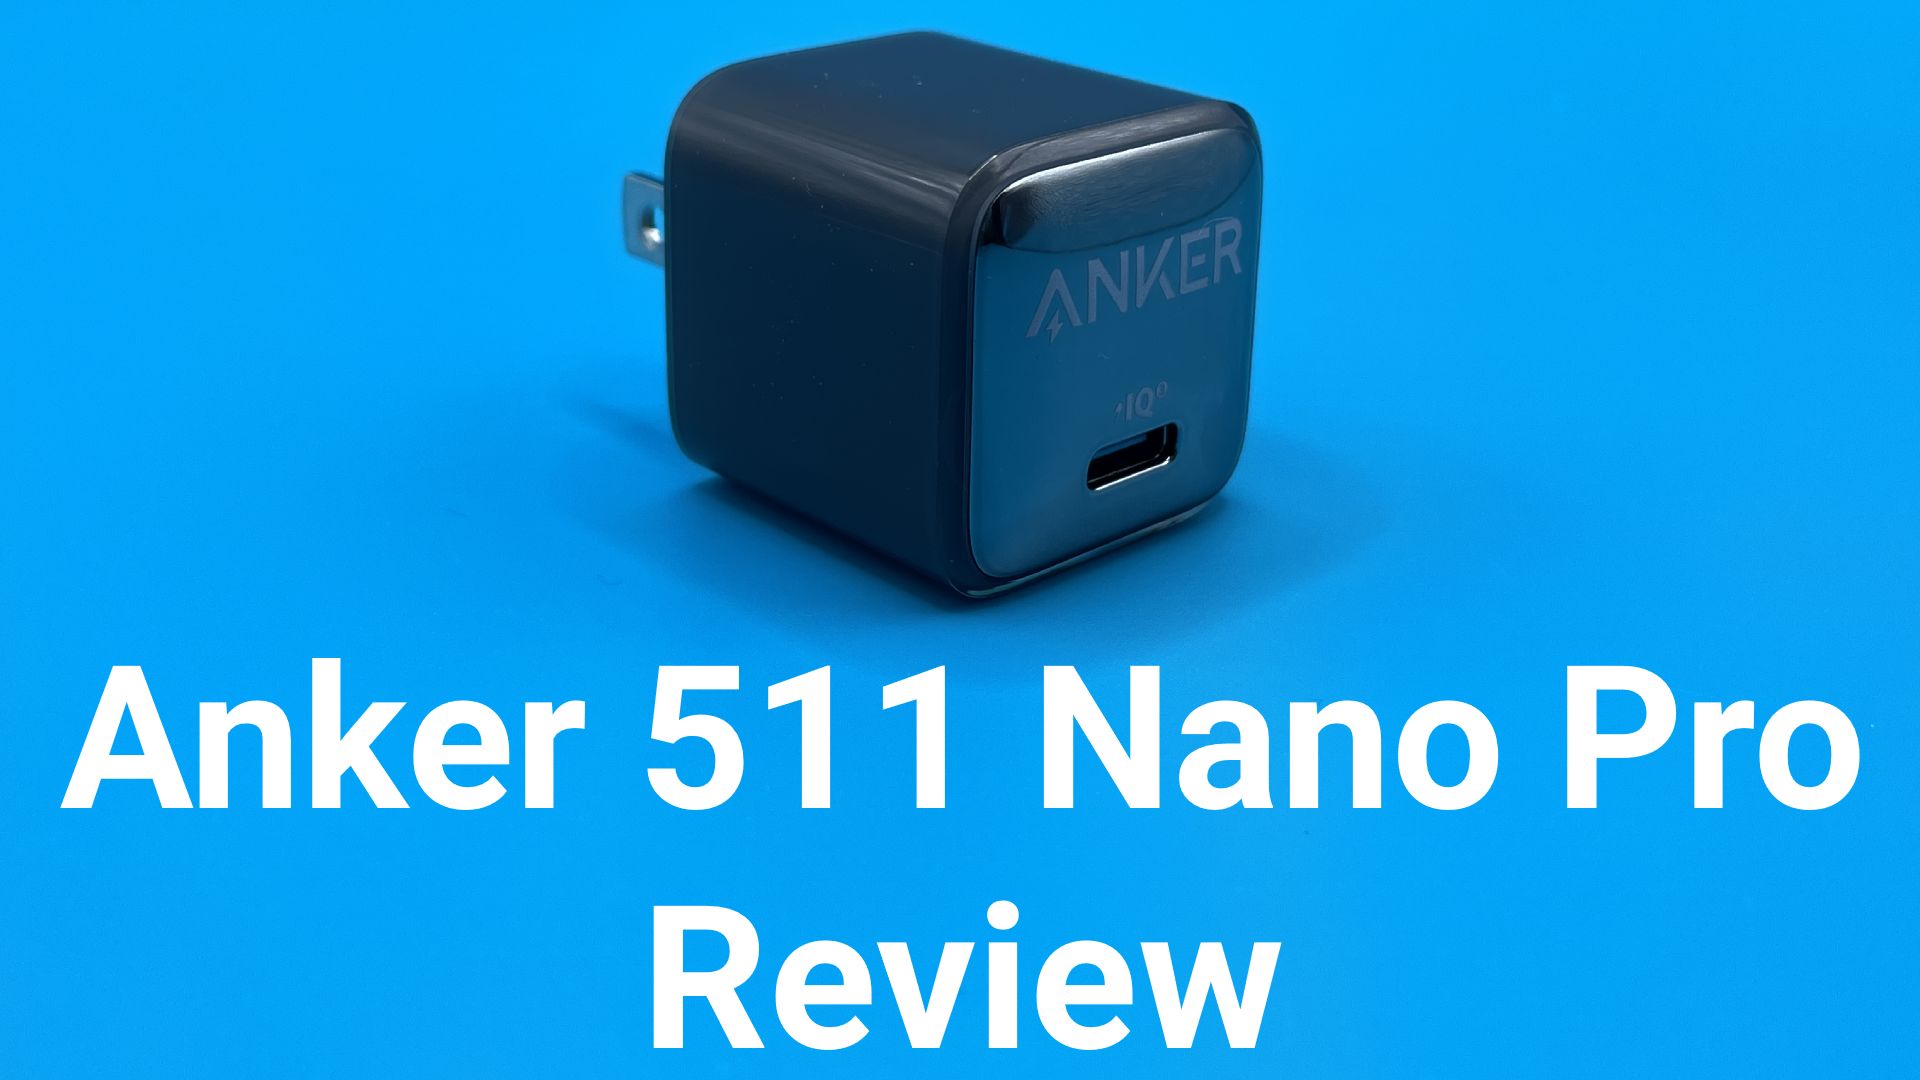 Anker Nano 3 iPhone charger monitors its temperature more than 3